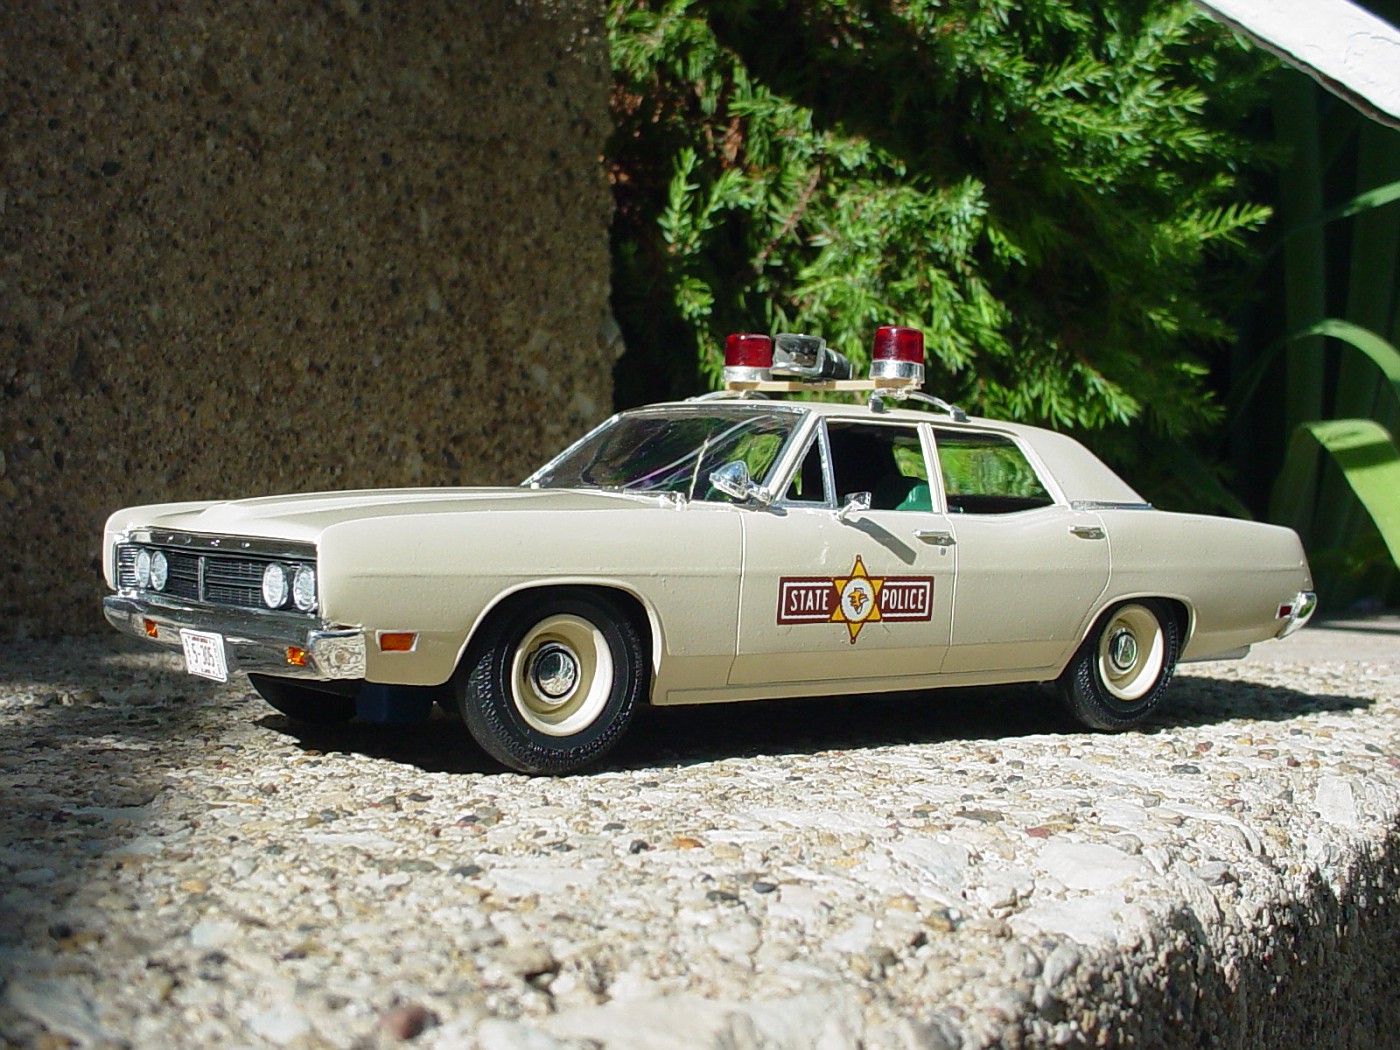 1970s police car information